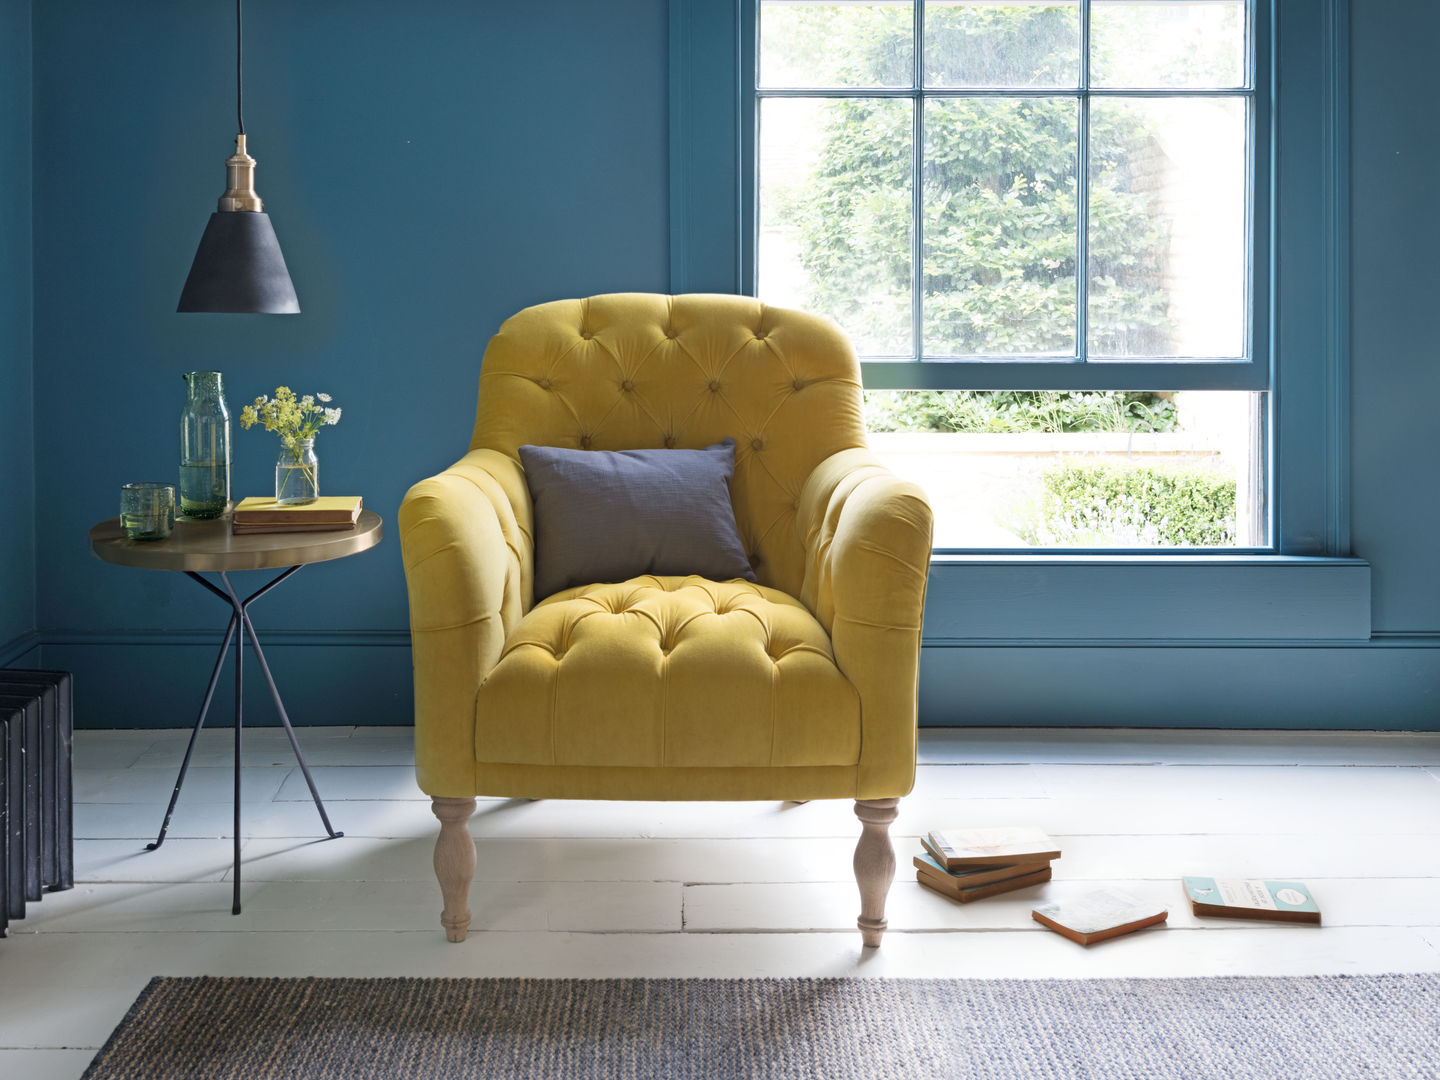 Reader armchair Loaf Salas de estar modernas armchair,yellow,button-back,reading chair,new,AW17